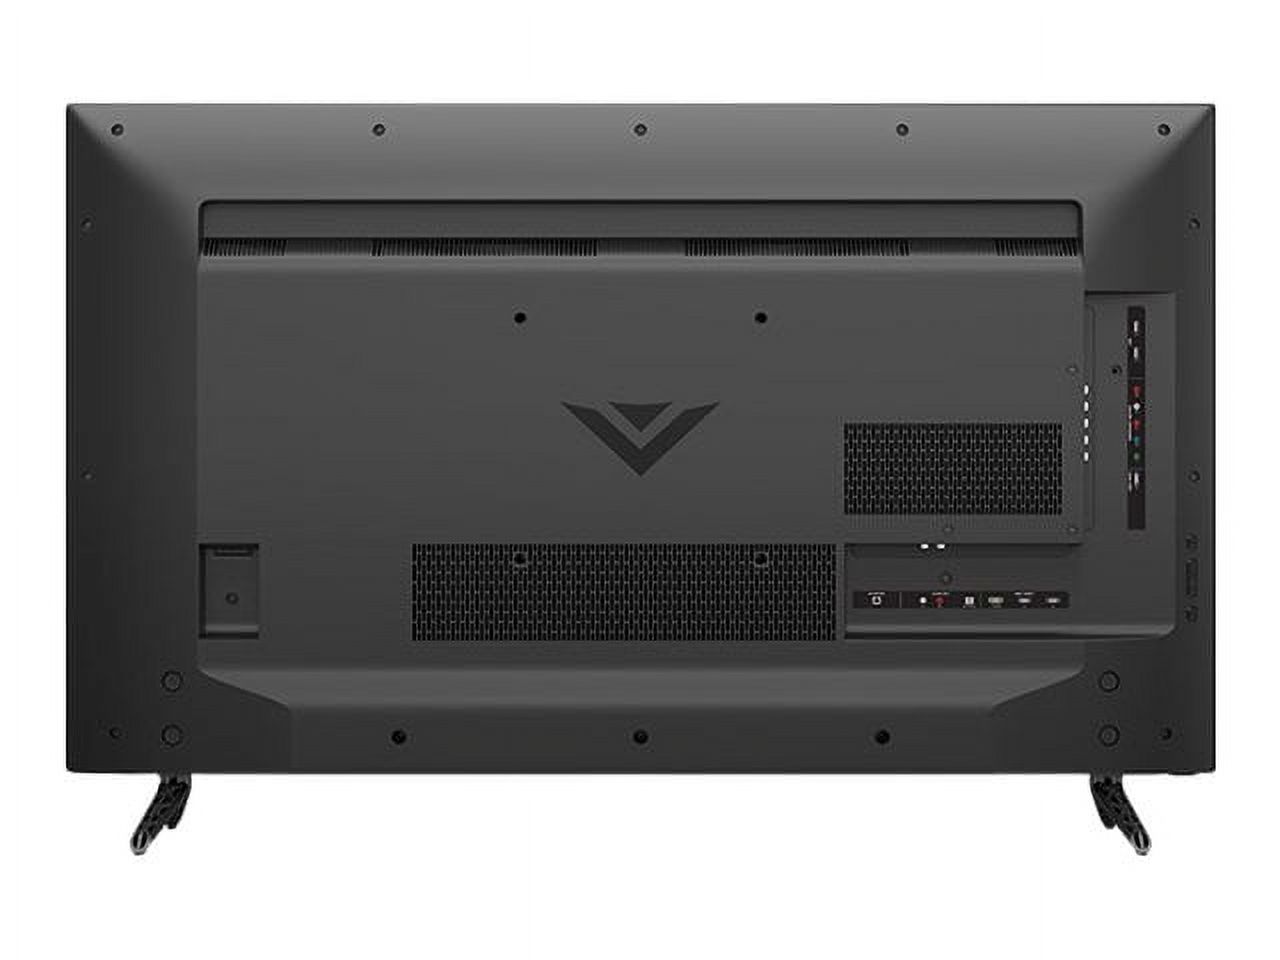 VIZIO SmartCast E70u-D3 Ultra HD Home Theater Display - 70" Diagonal Class (69.5" viewable) - E Series LED-backlit LCD display - 4K UHD (2160p) 3840 x 2160 - image 4 of 9